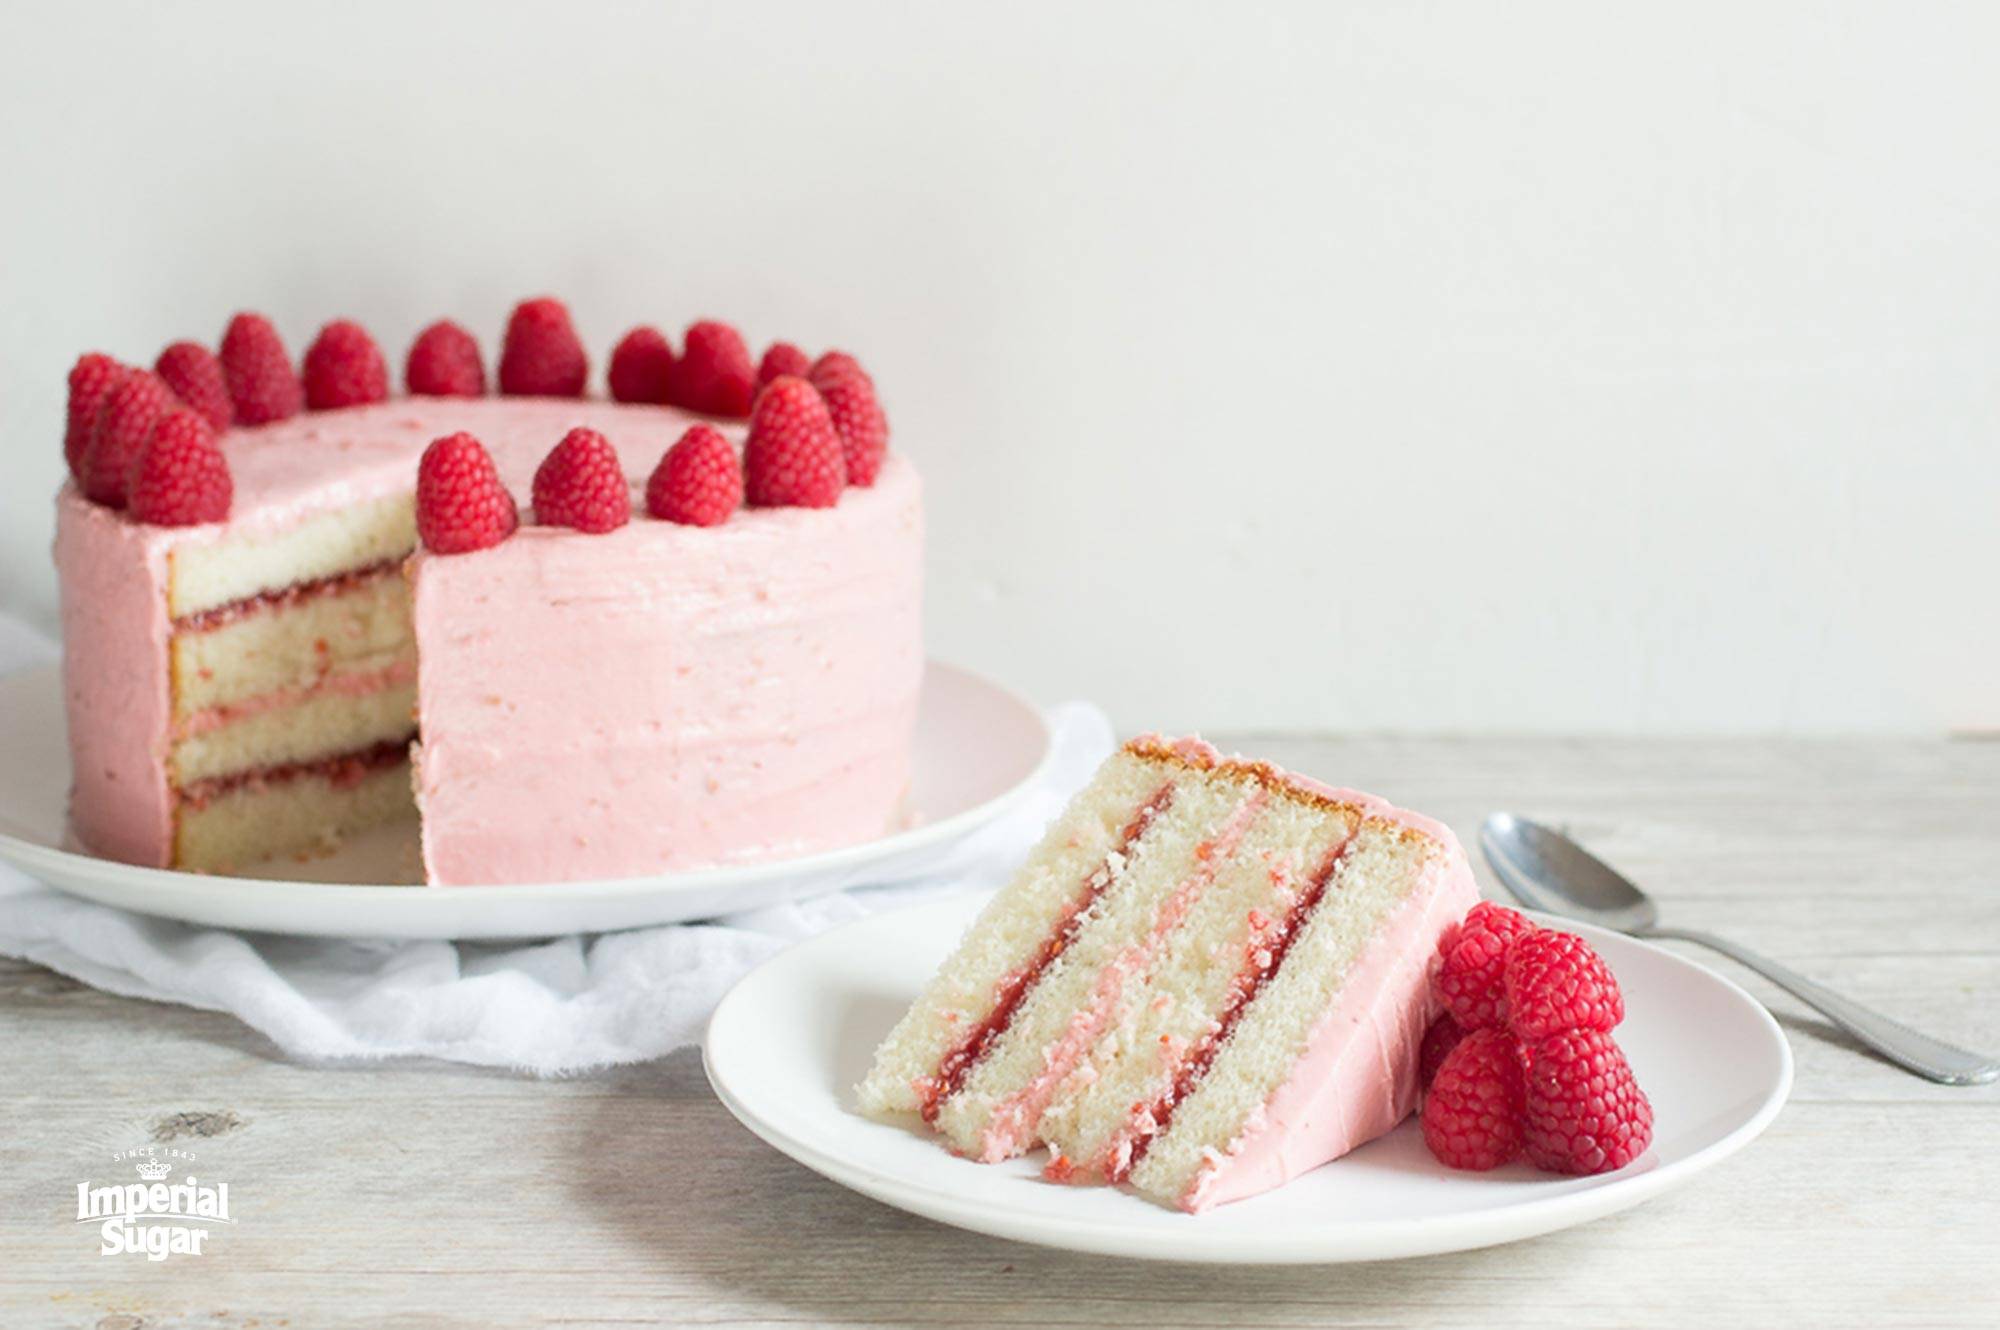 Chocolate-raspberry Cake Recipe | MyRecipes